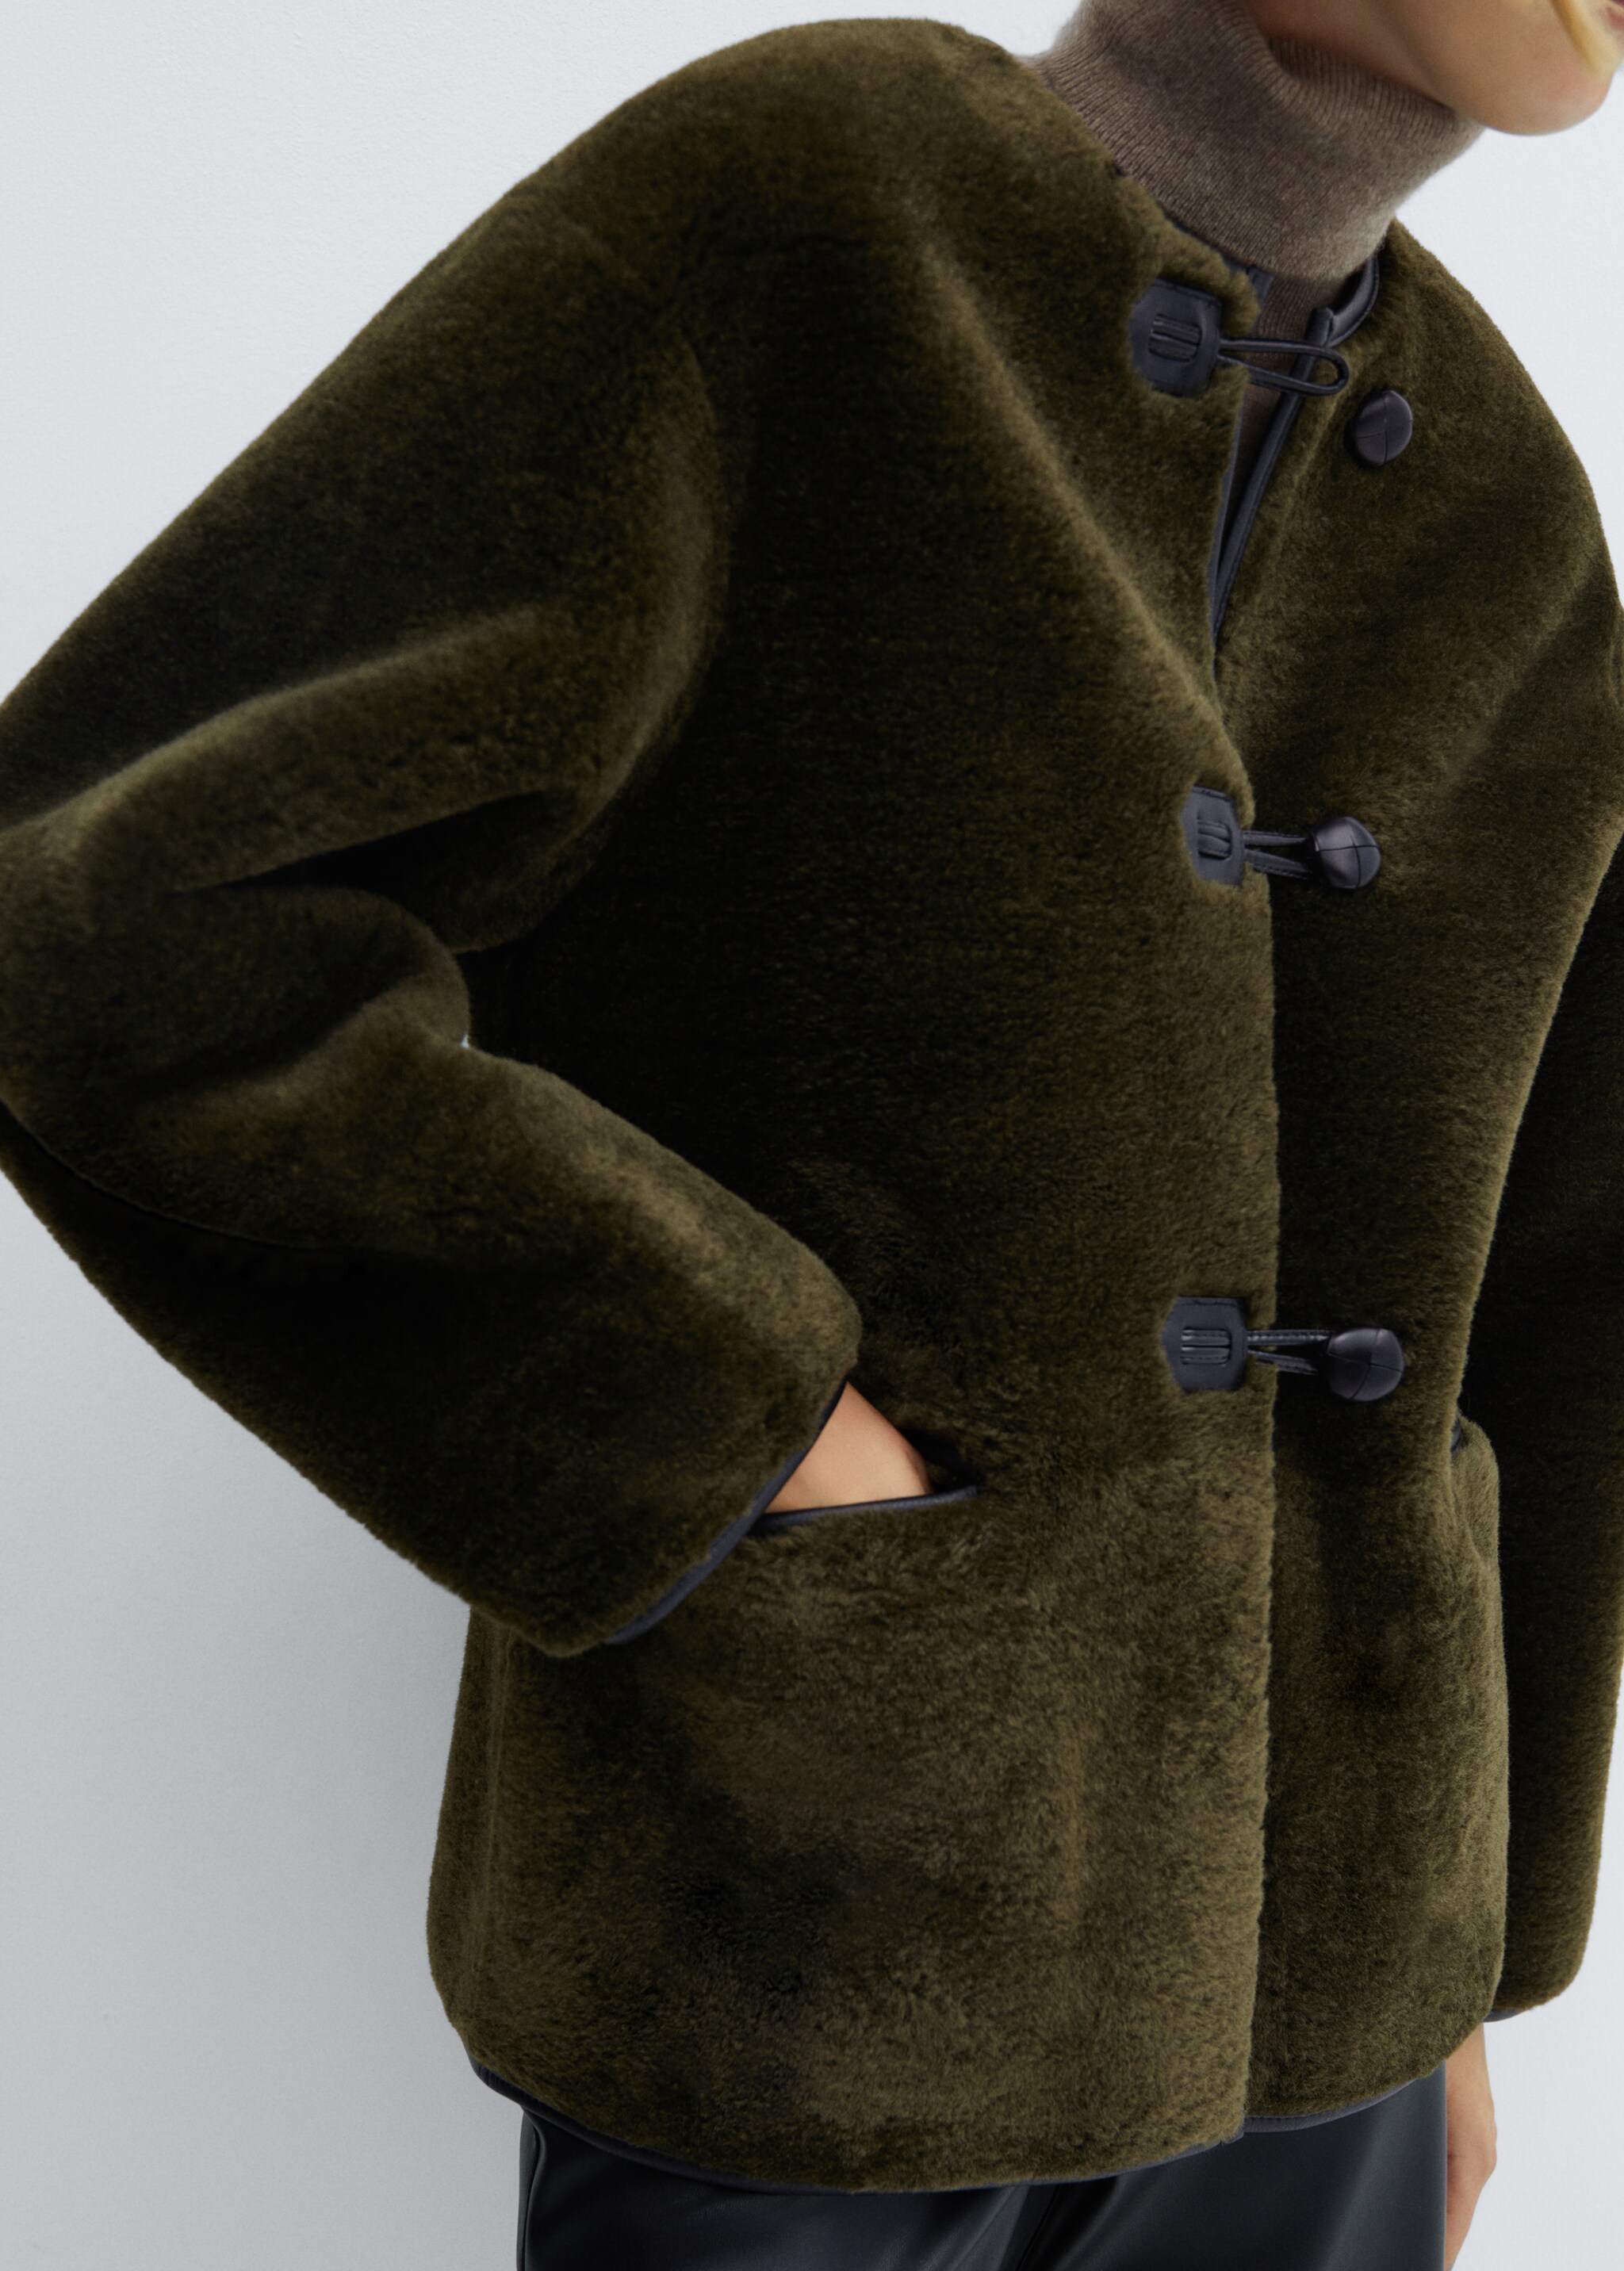 Fur-effect coat with appliqués - Details of the article 6